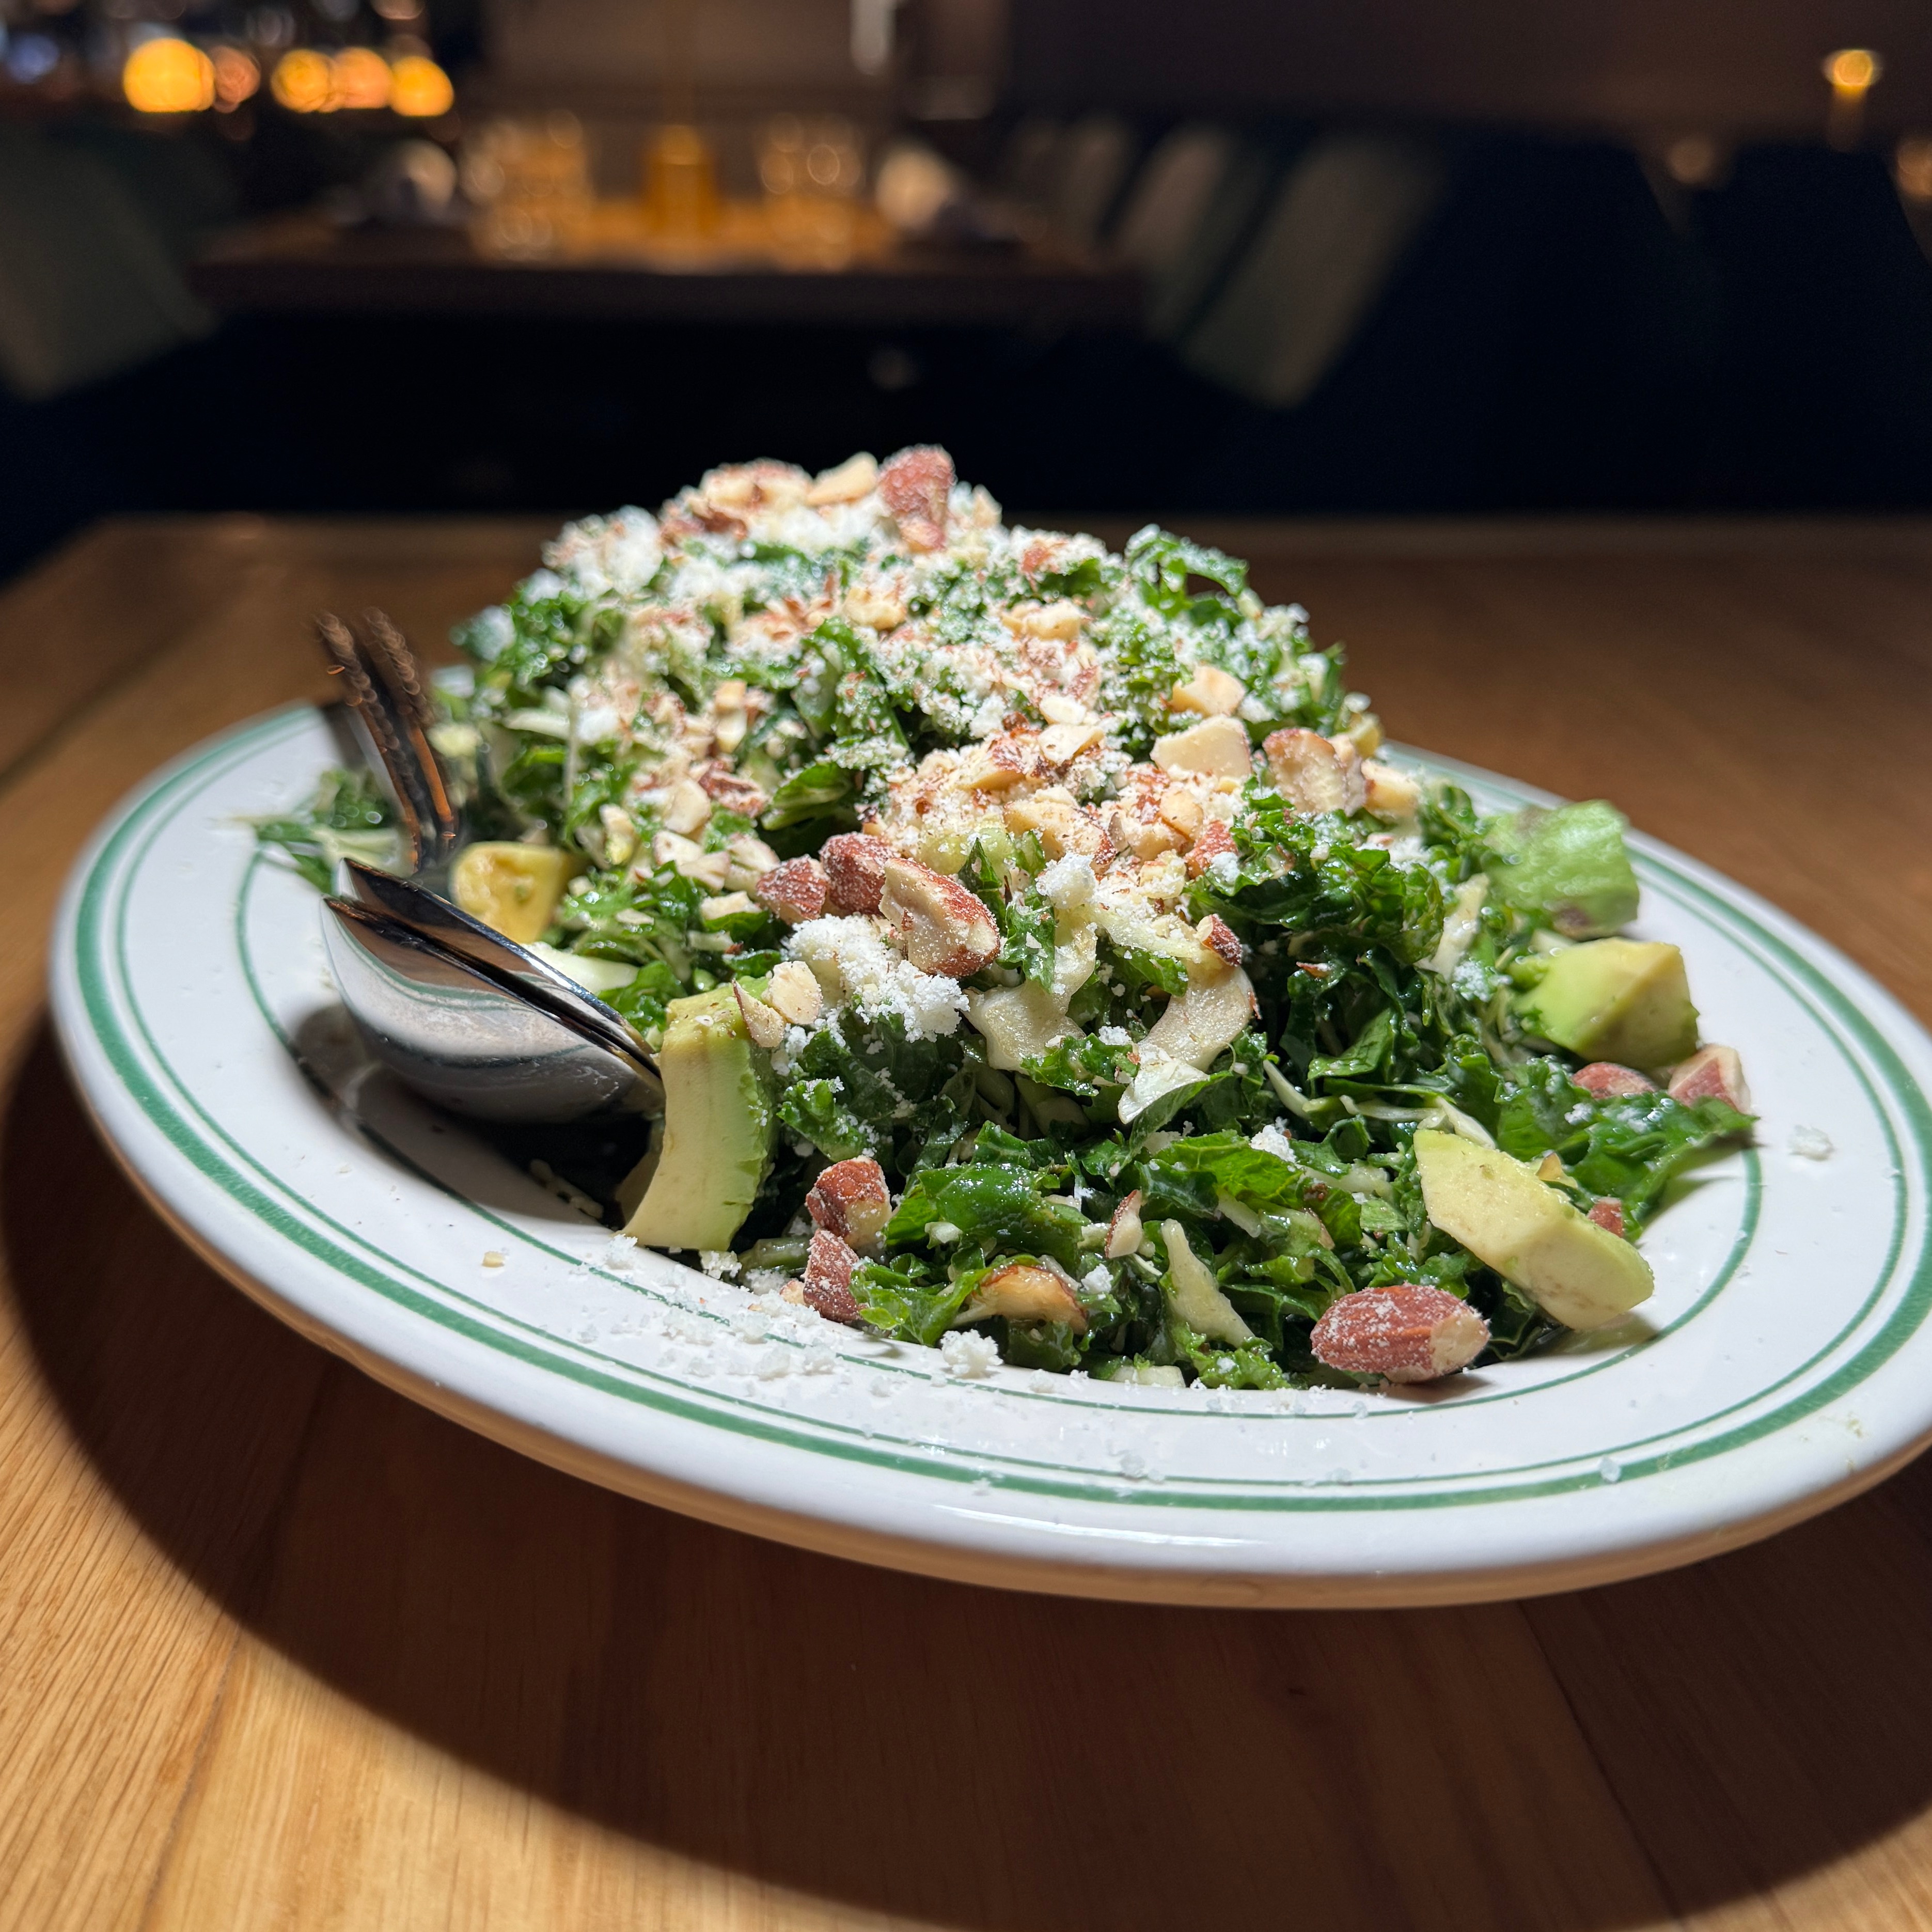 Jame's Kale Salad $17 at Jemma on #foodmento http://foodmento.com/place/14863